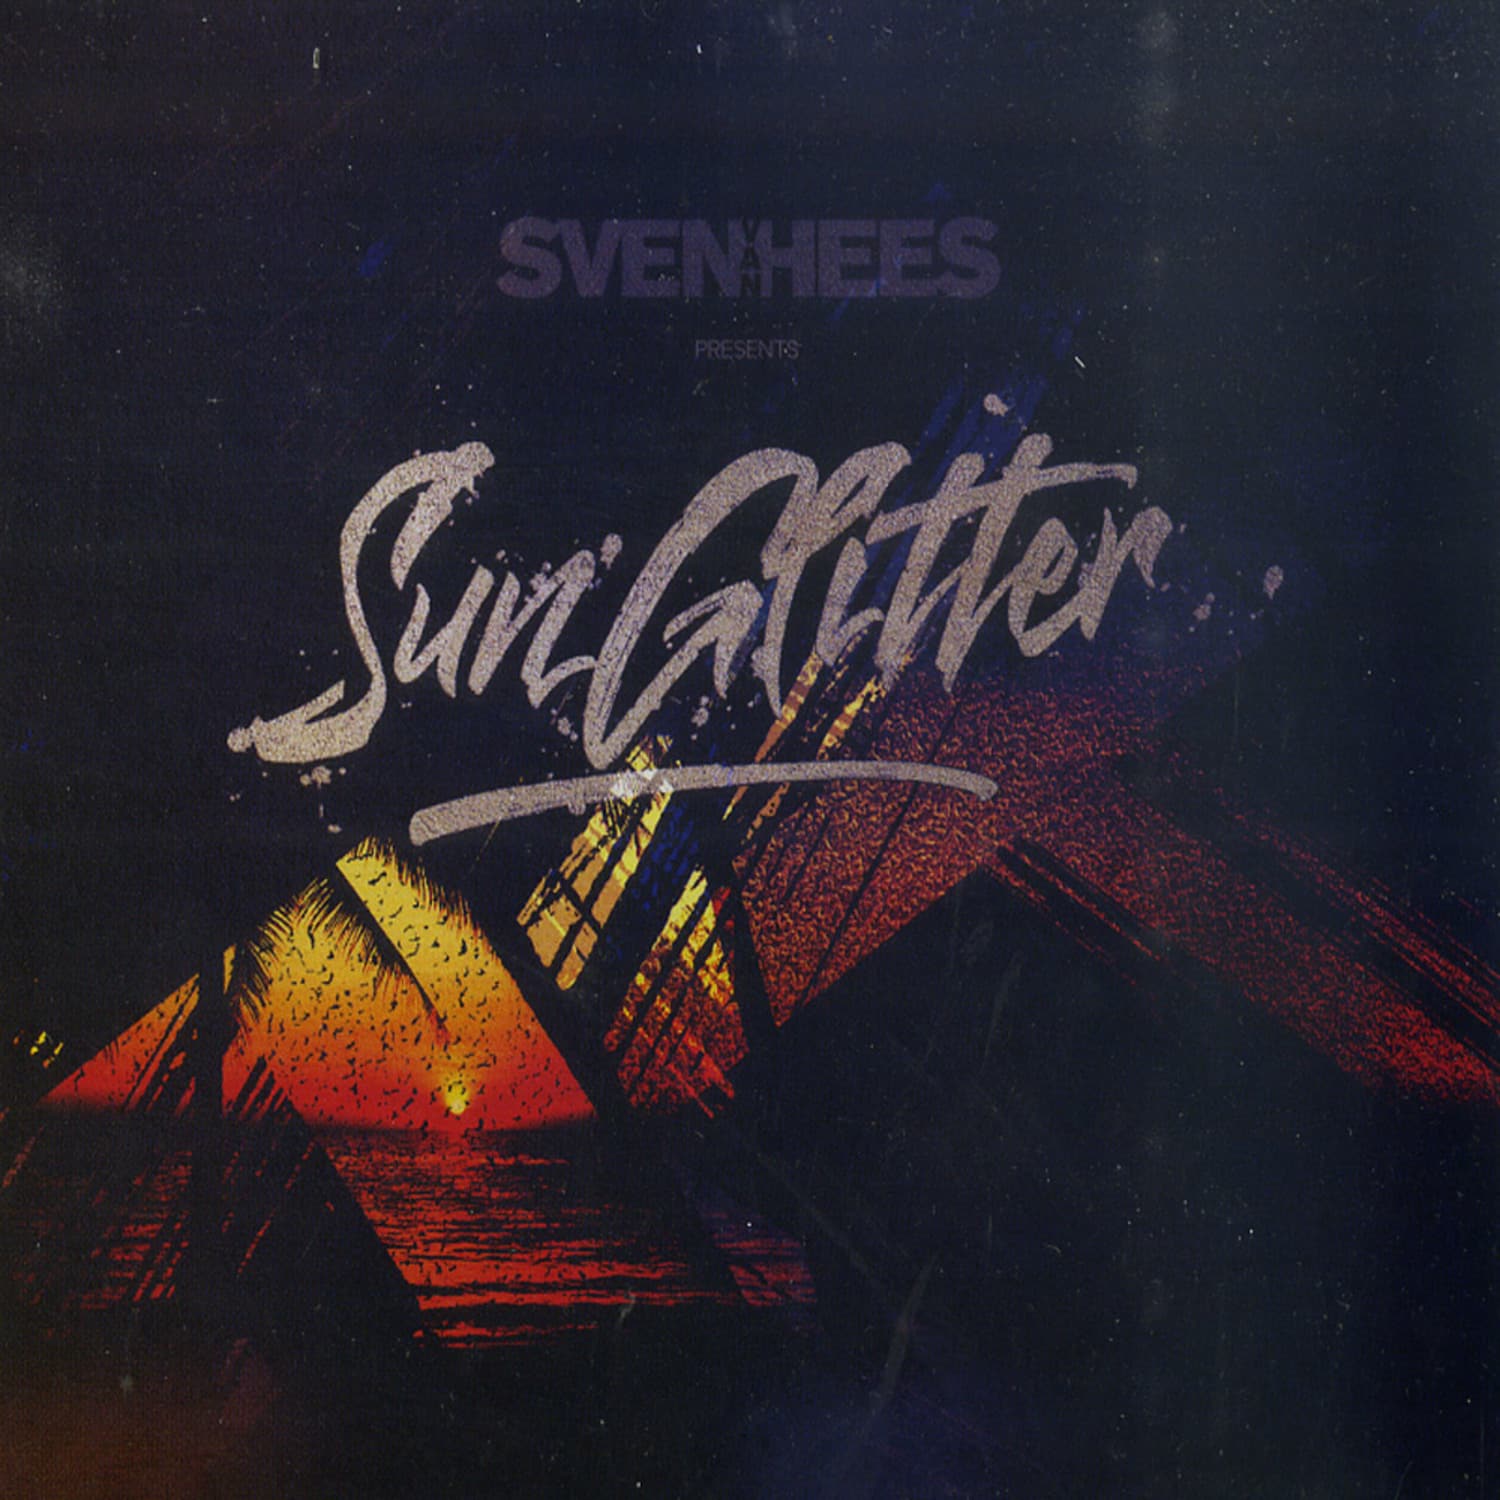 Sven Van Hees - SUN GLITTER 